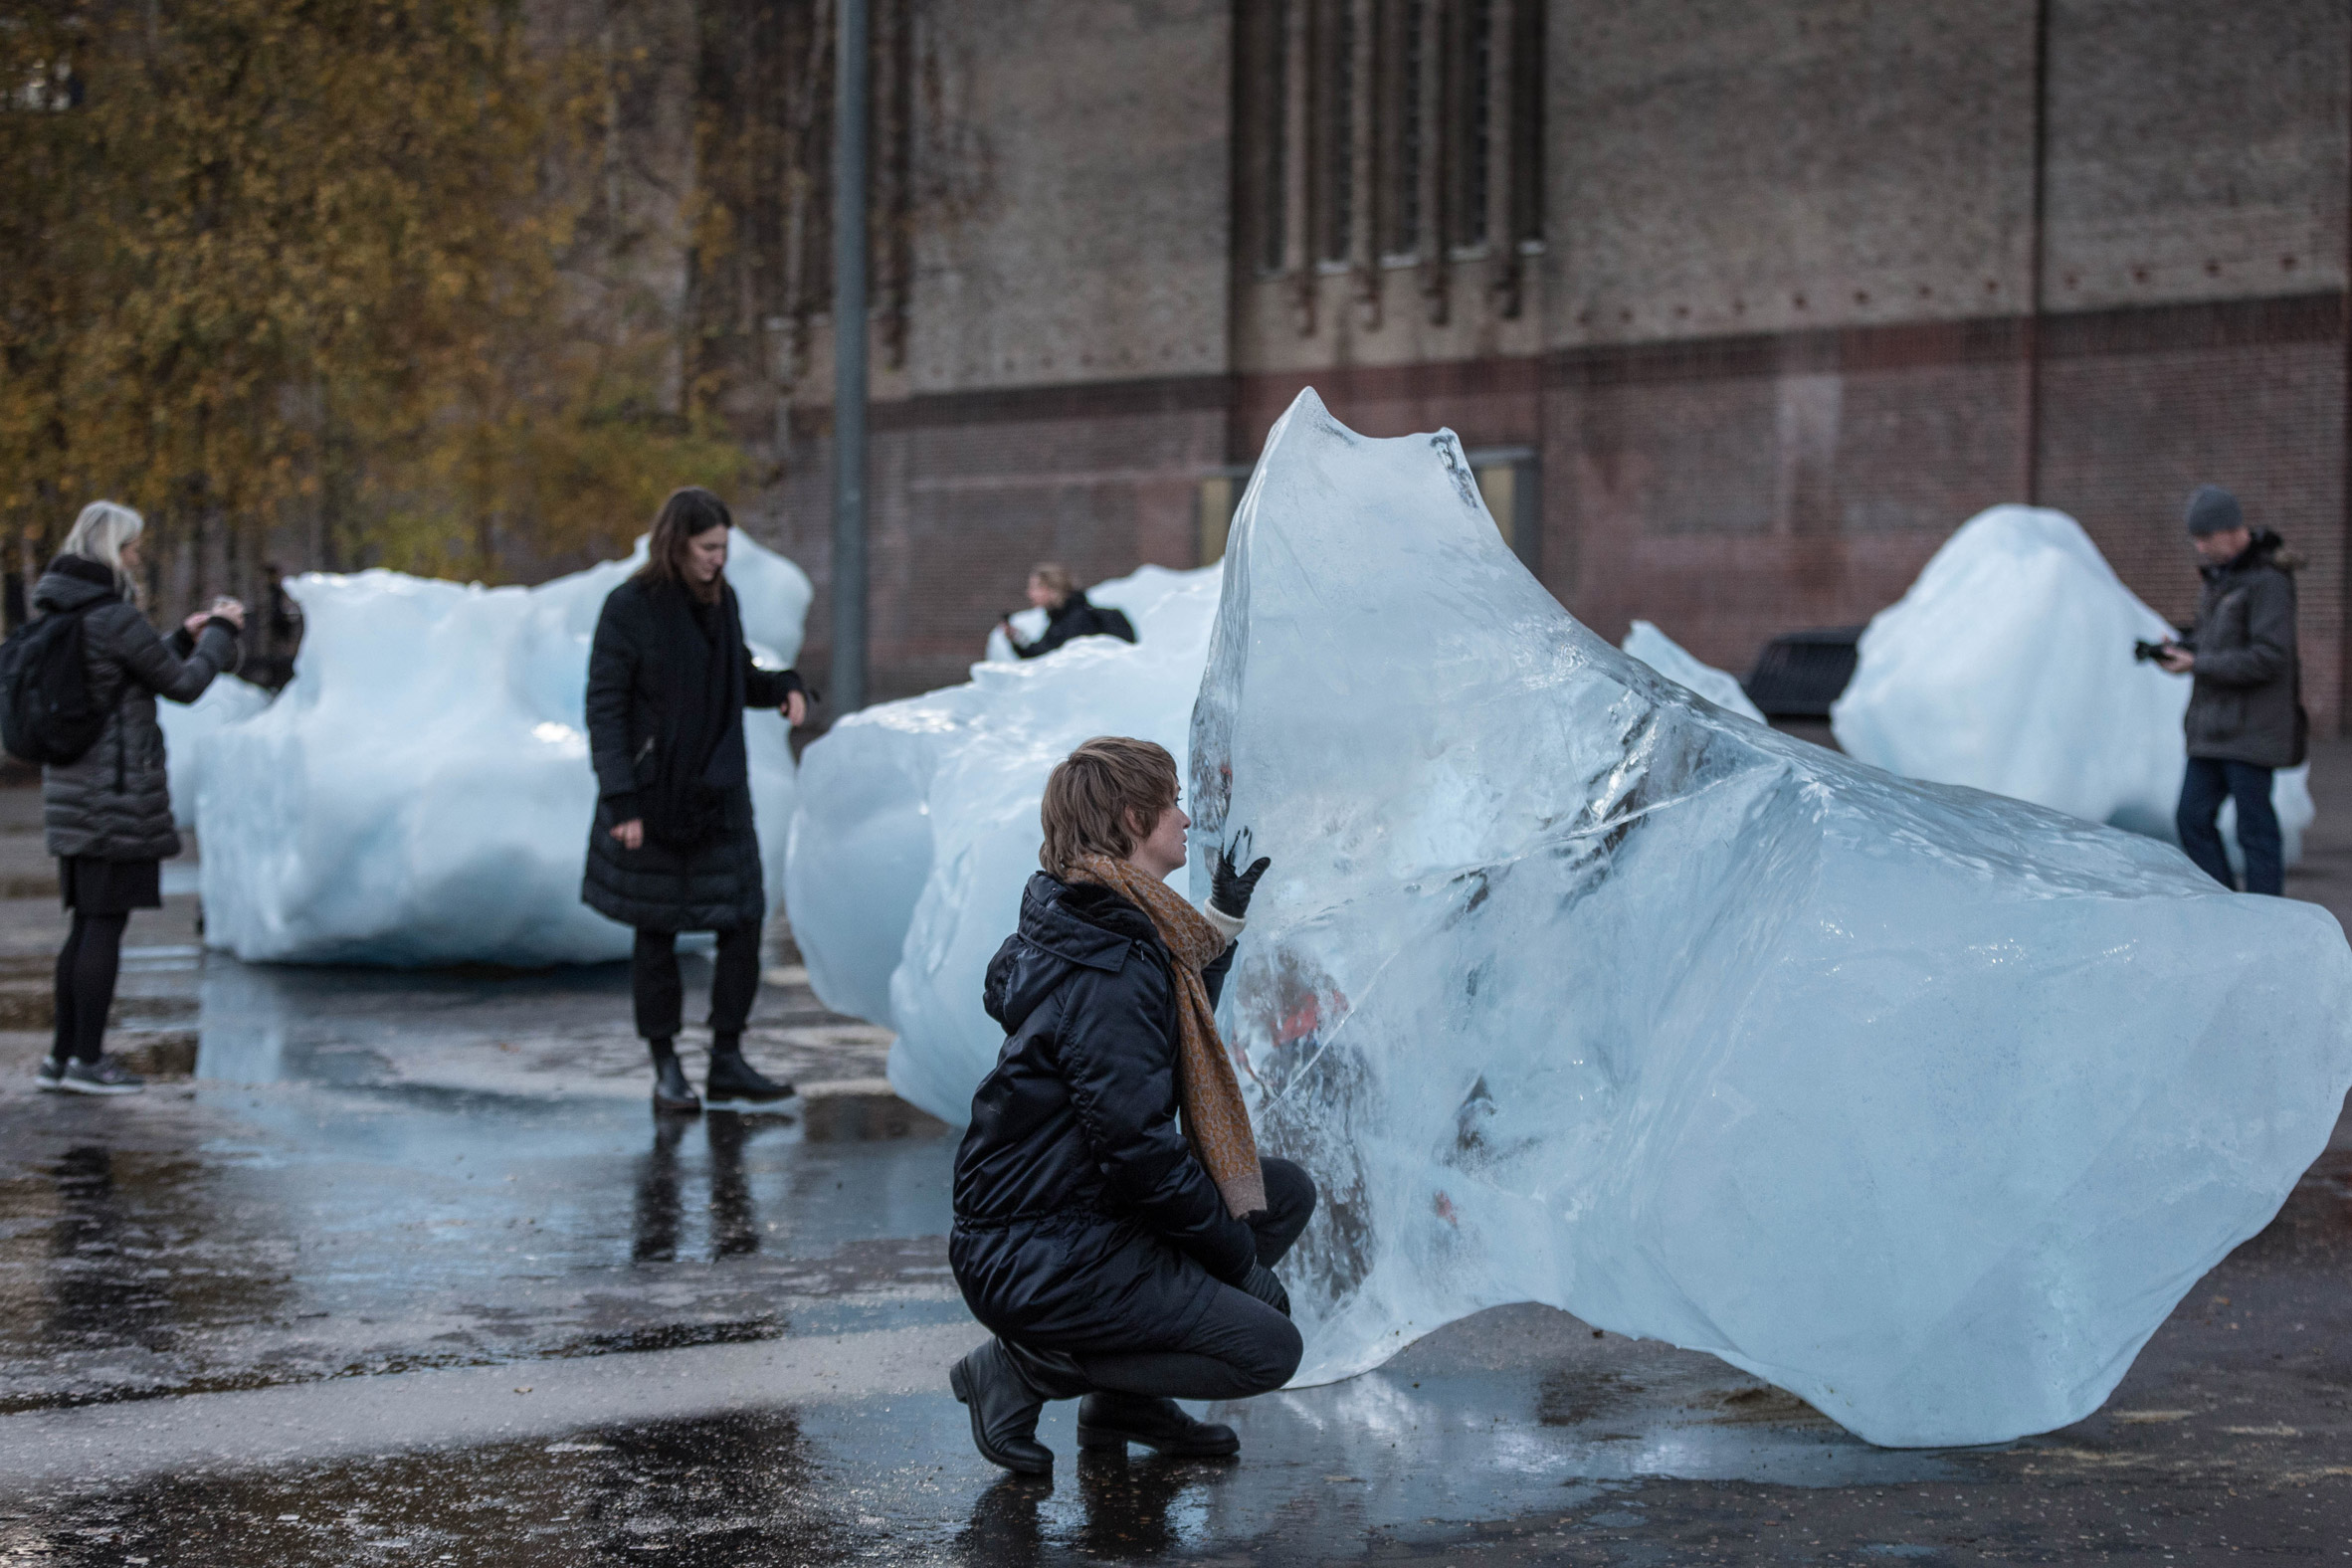 Olafur Eliasson installs giant blocks of ice across London